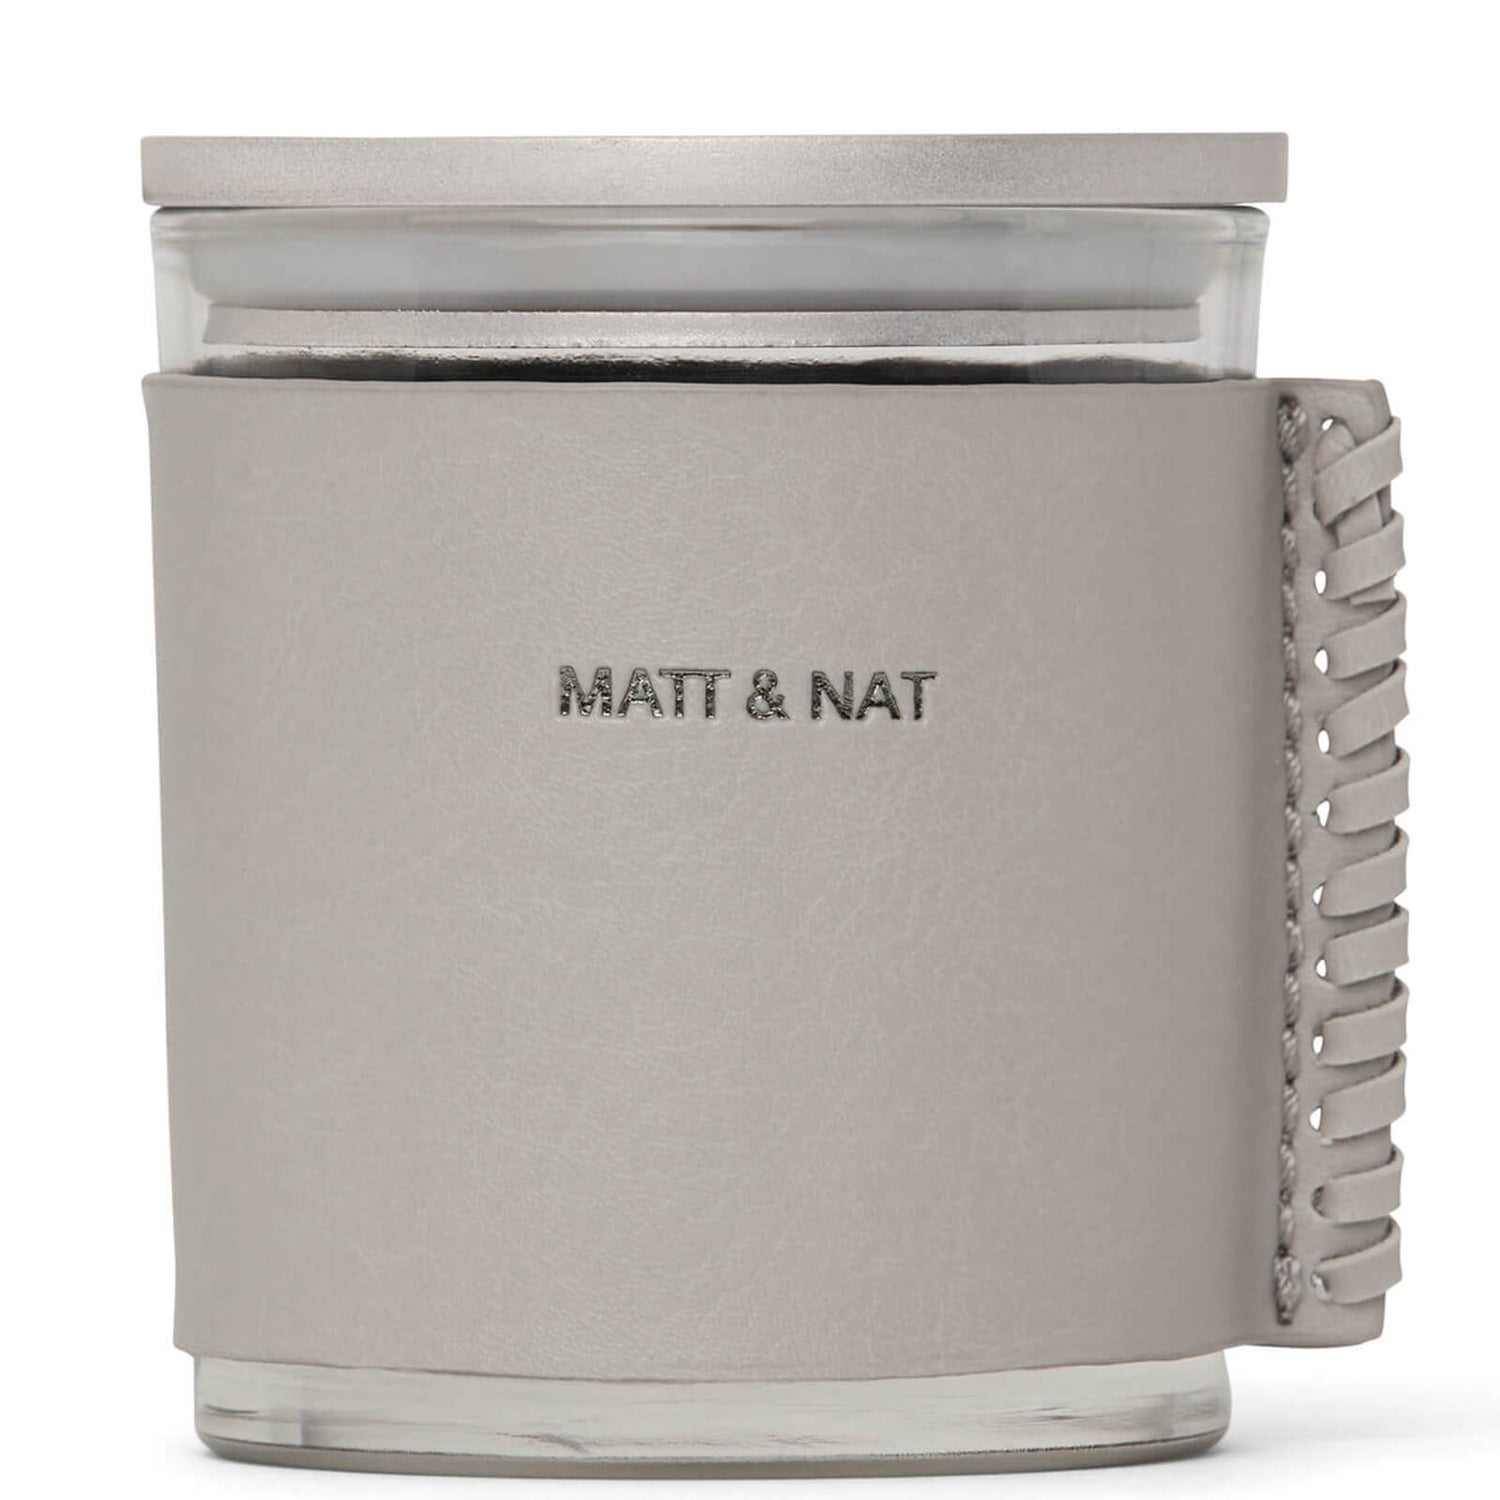 Matt & Nat Vegan Candle - Every Cloud Has A Silver Lining